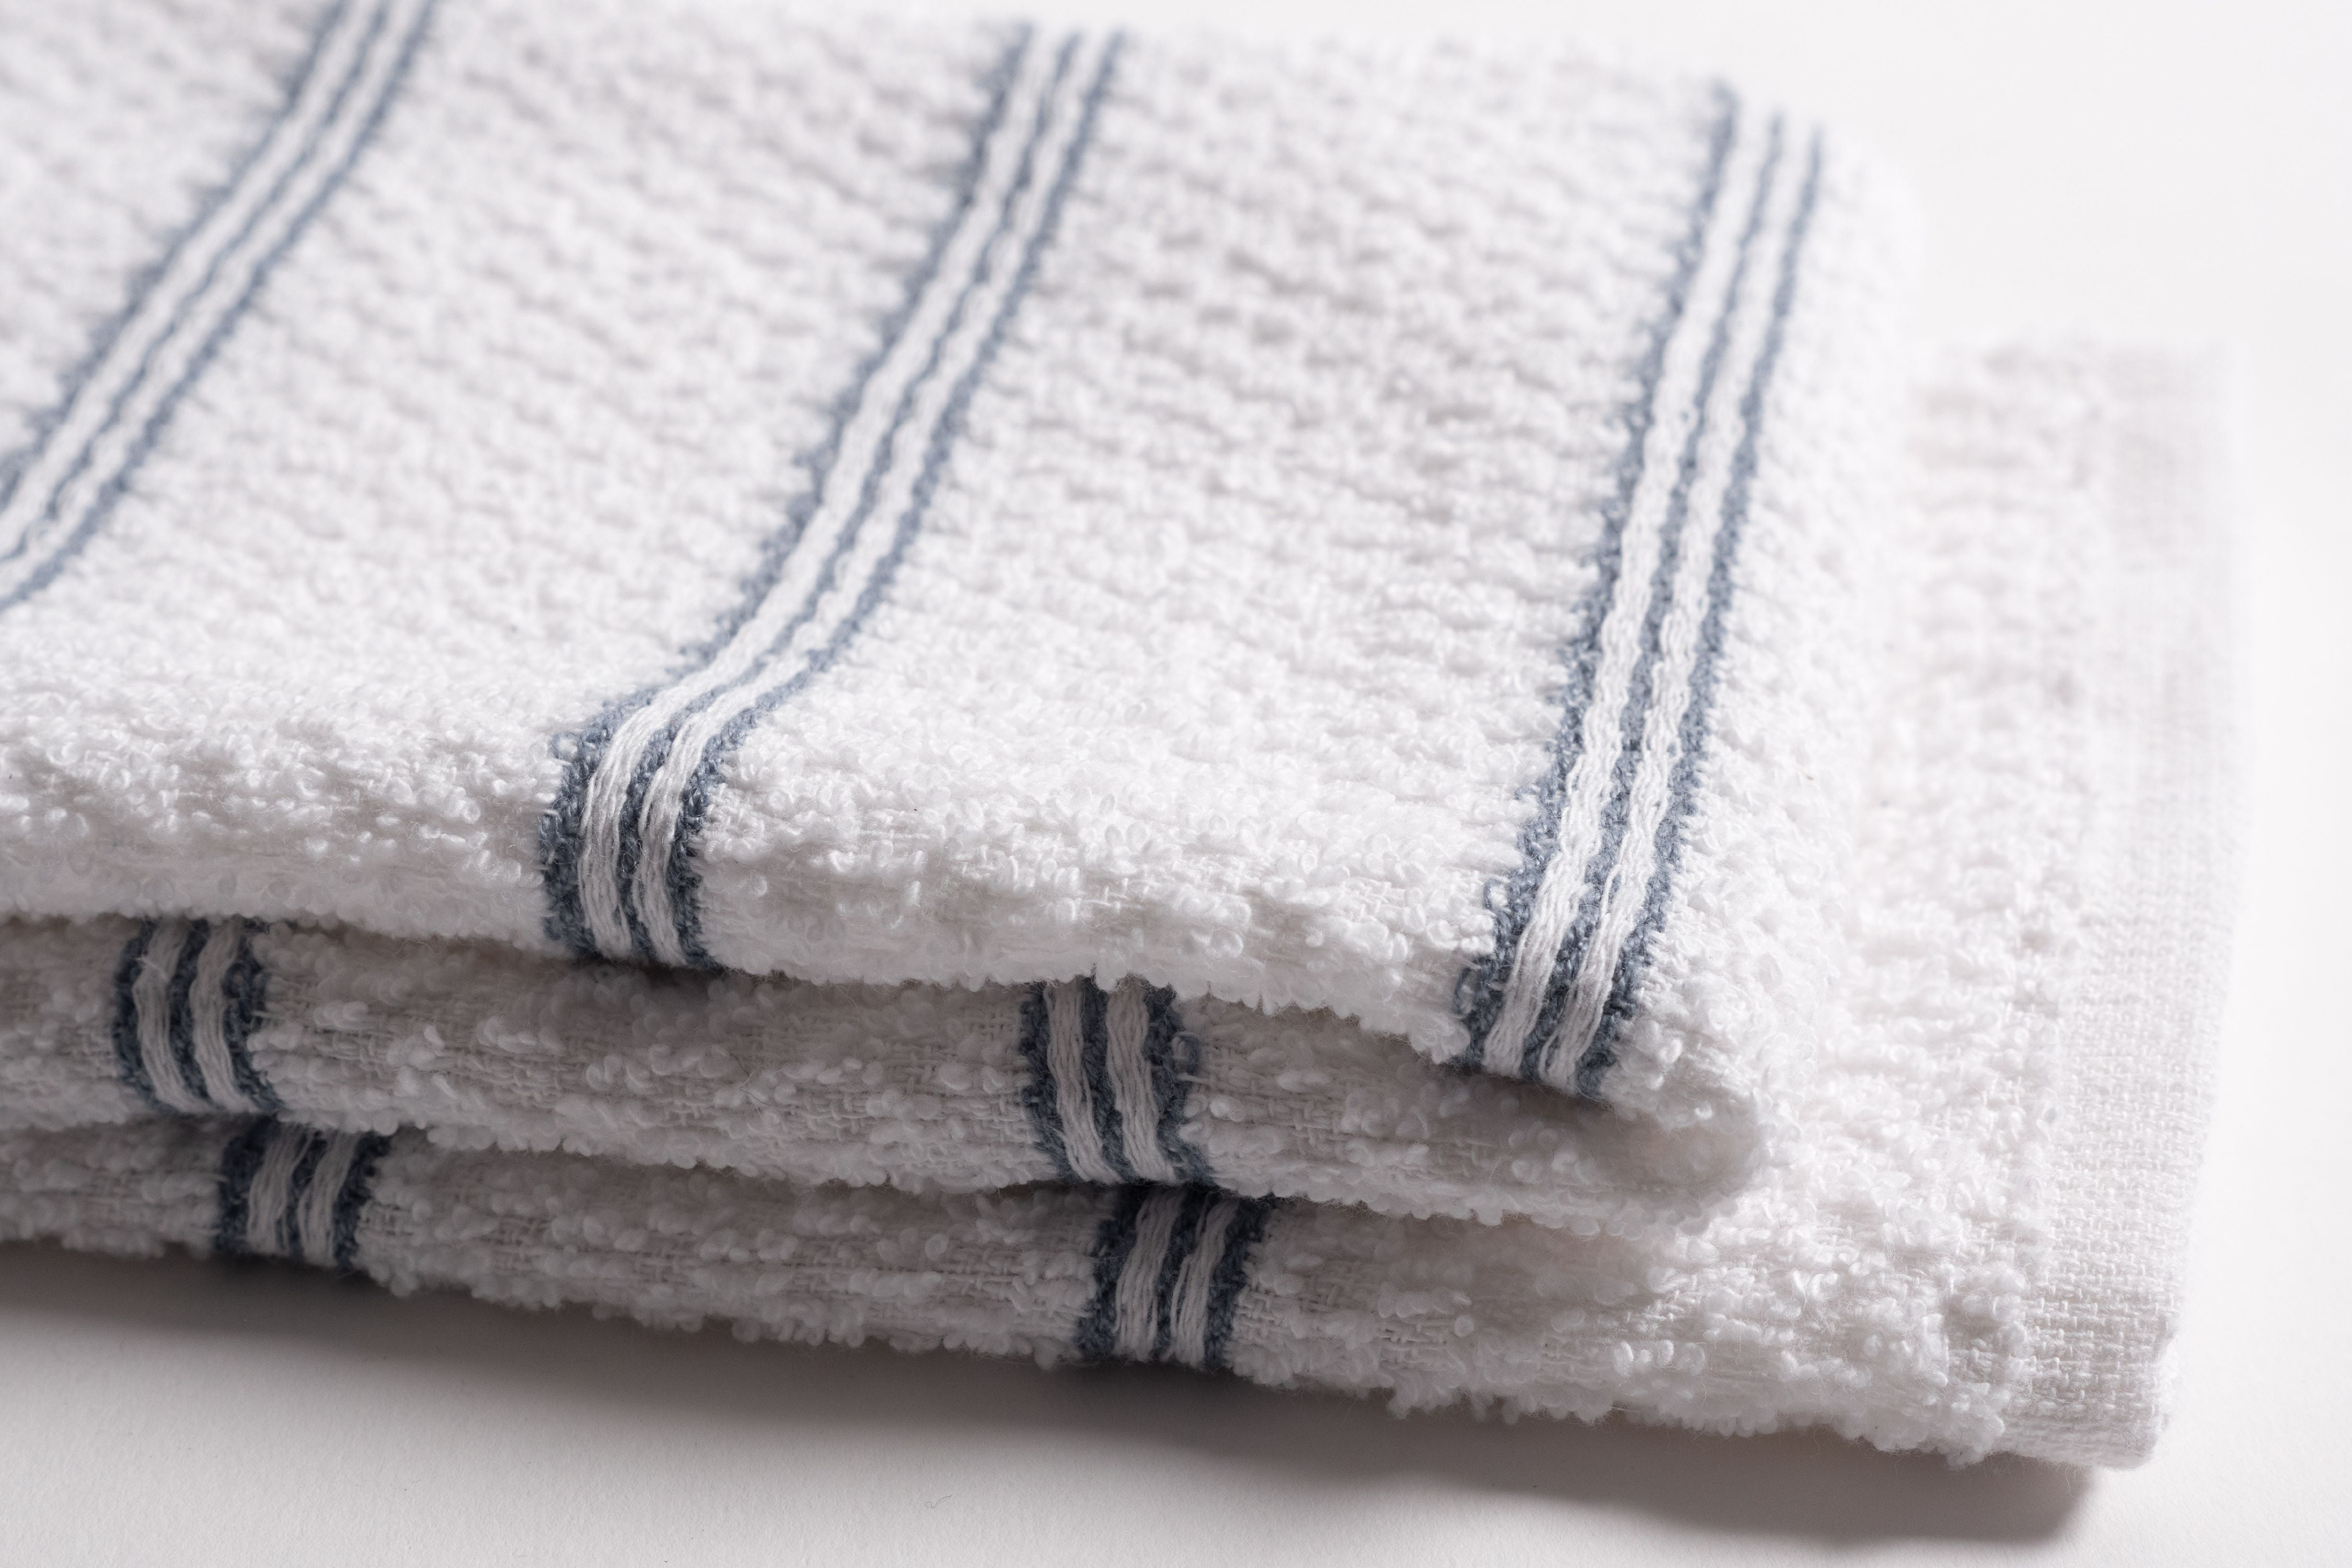 KAF HOME Piedmont Terry Kitchen Towels, Teal, 100% Cotton, 16 x 26